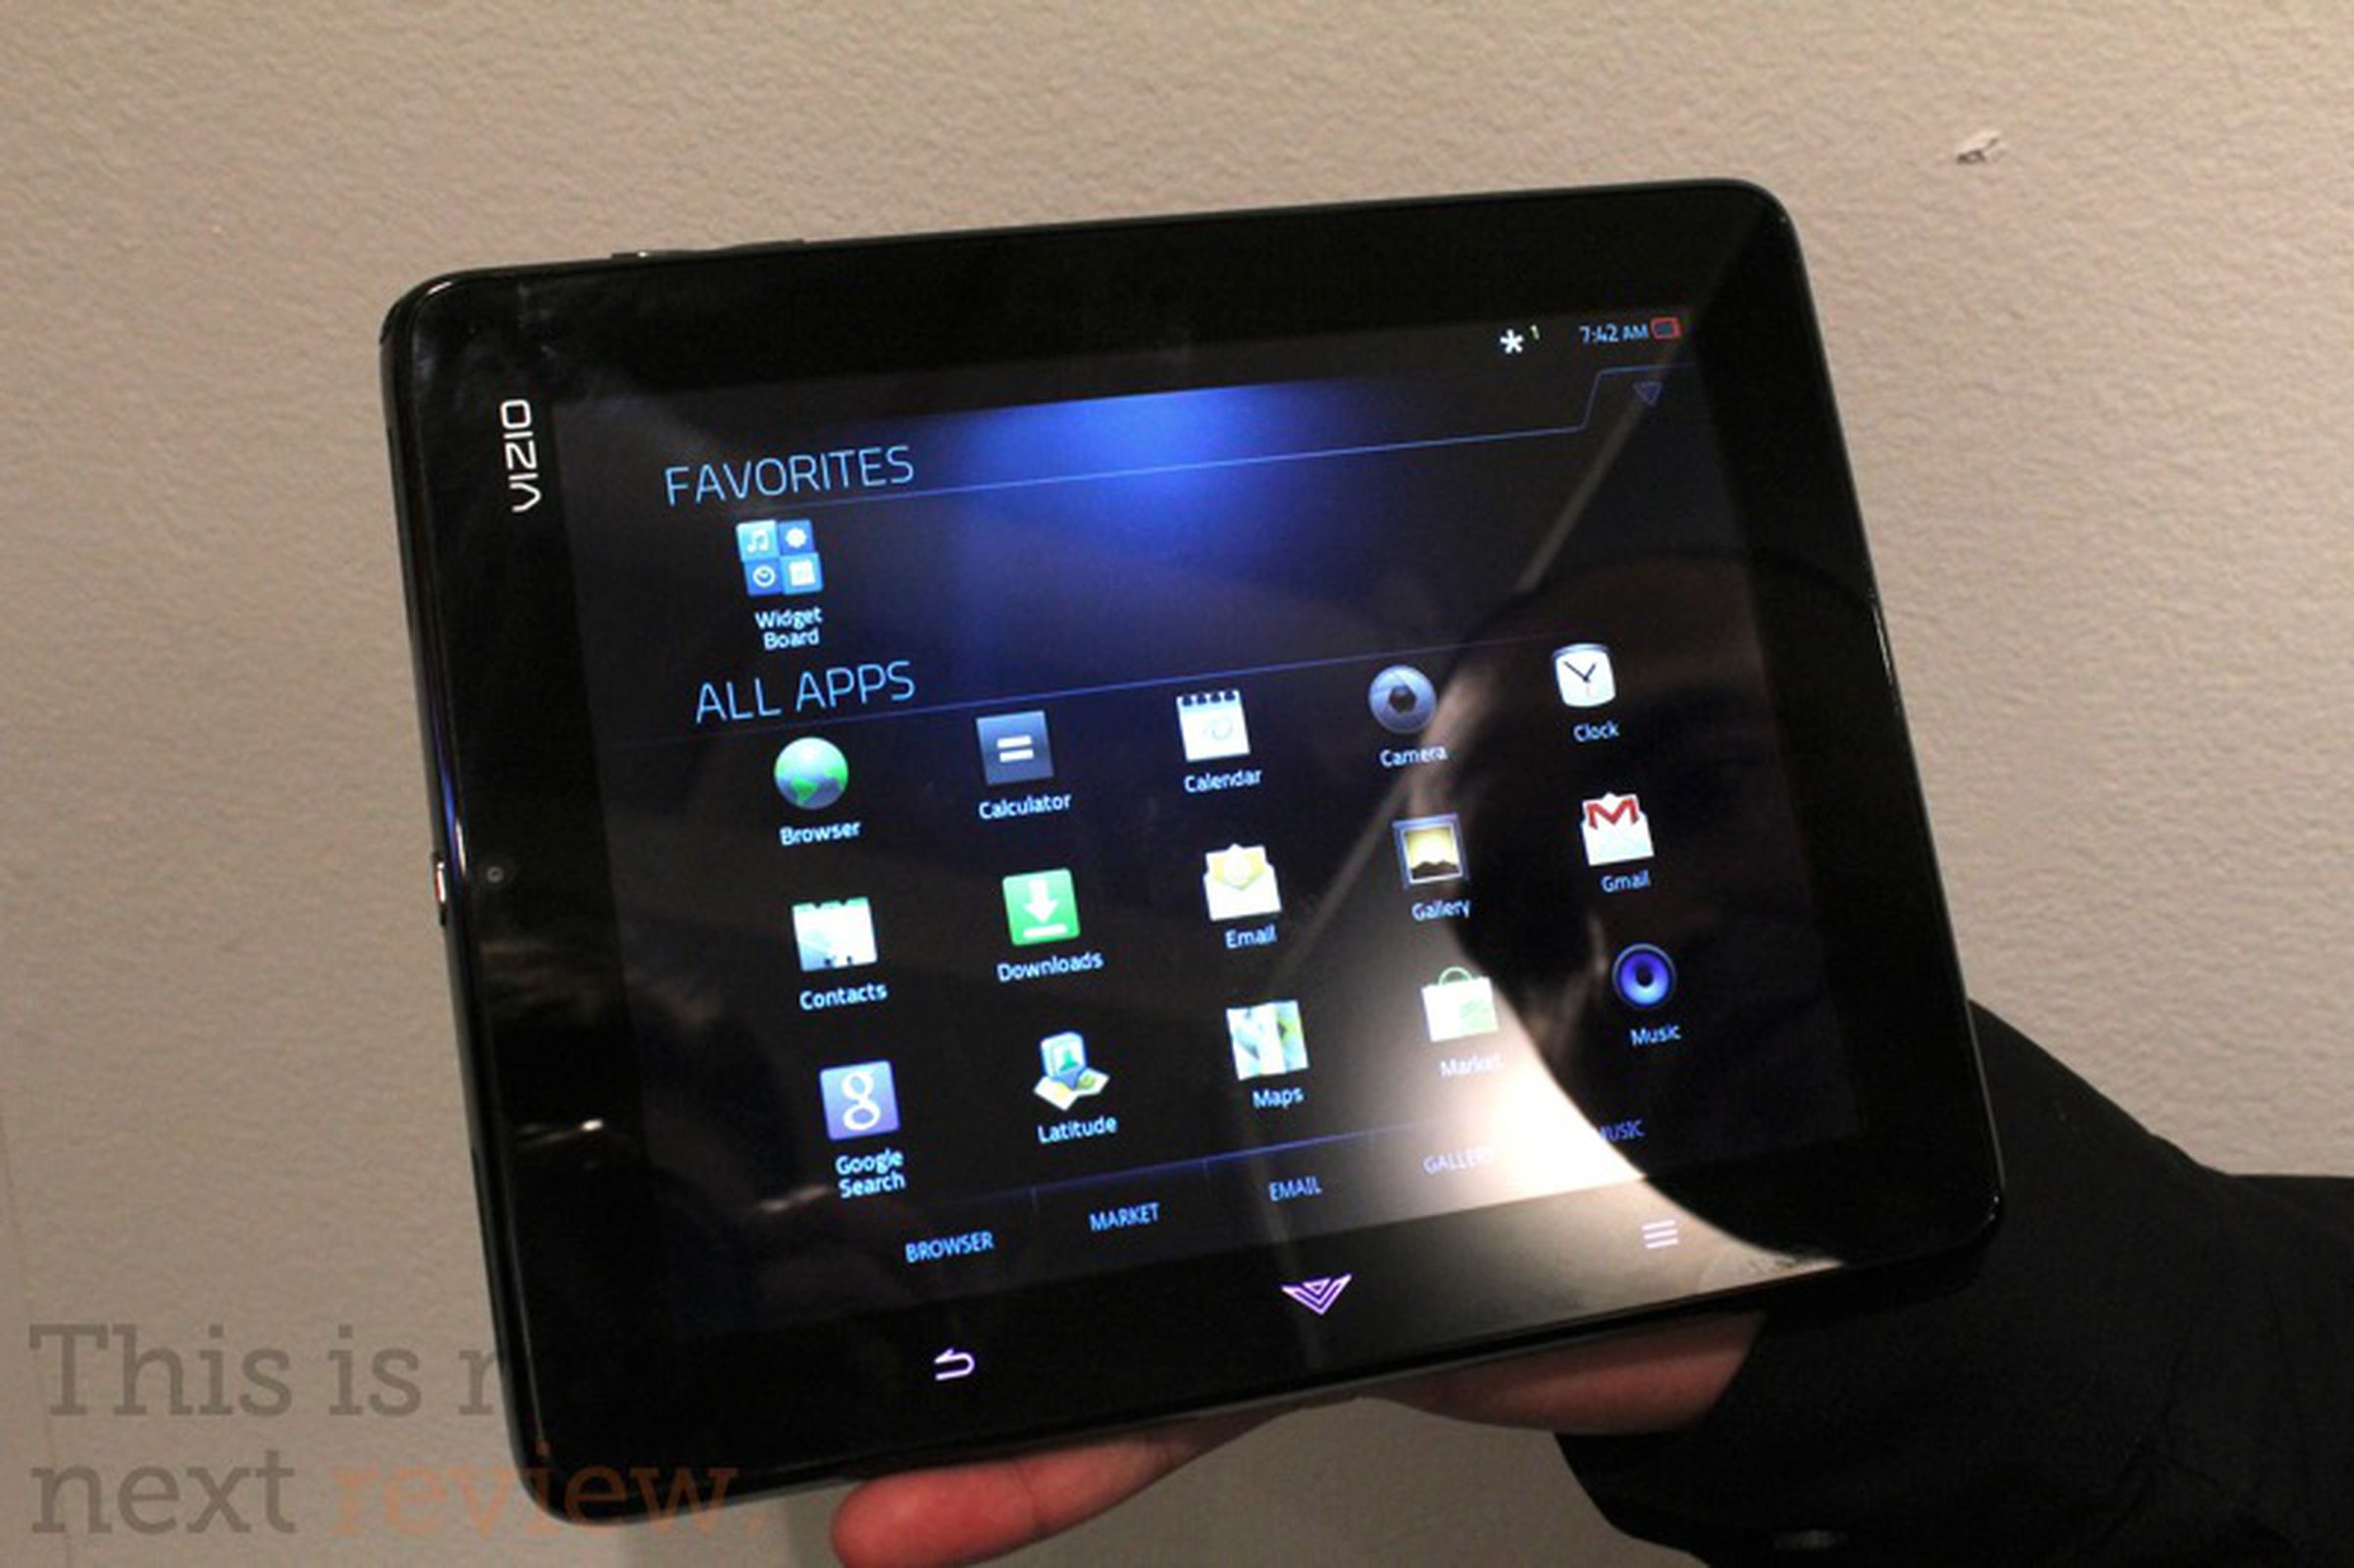 Vizio Tablet hands-on